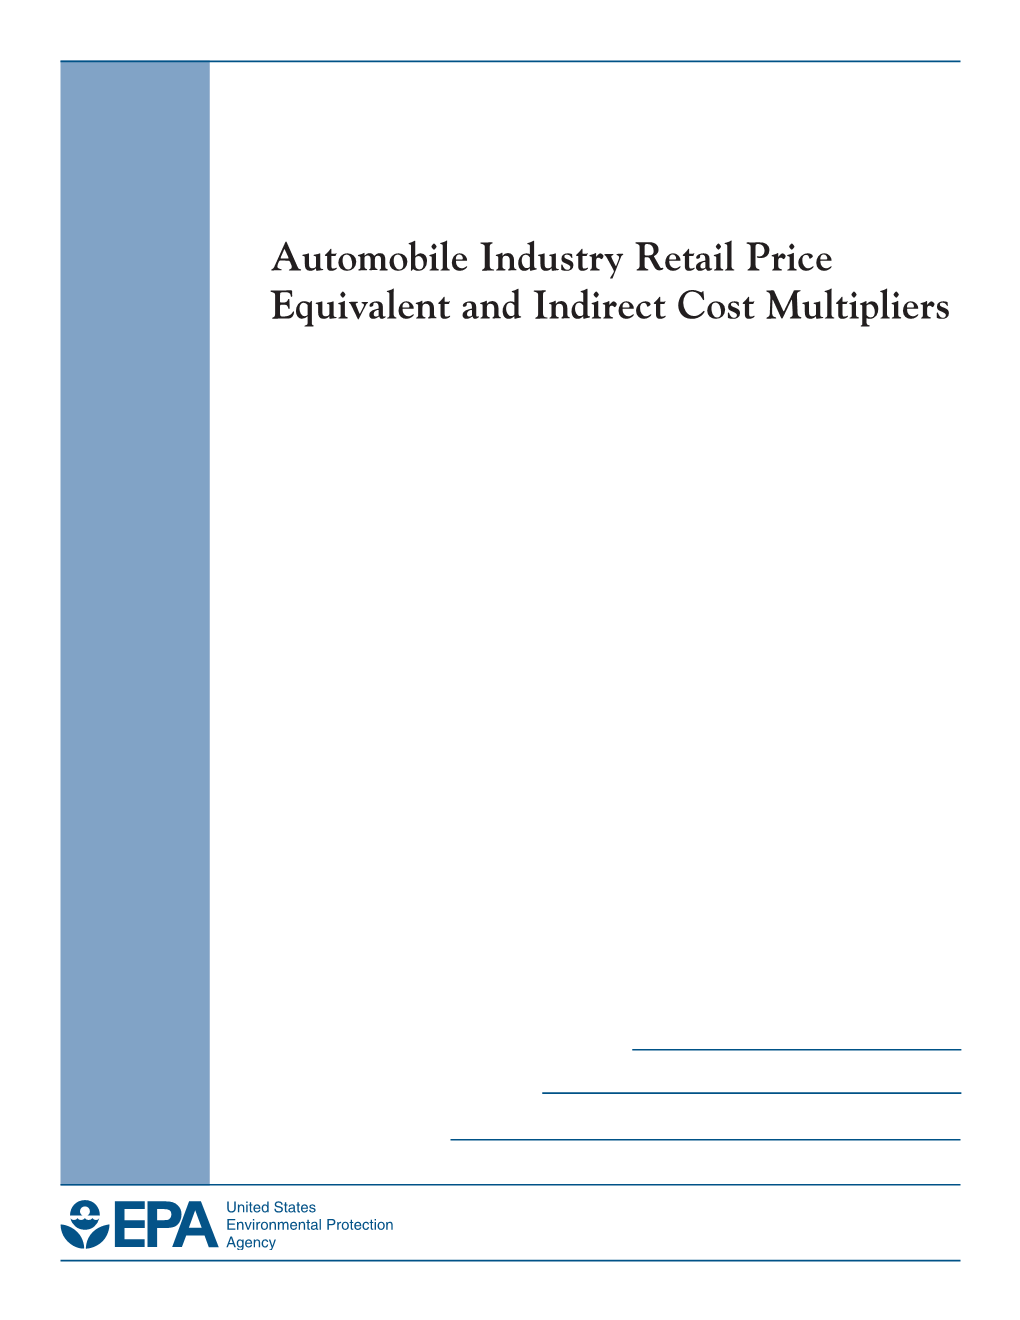 Automobile Industry Retail Price Equivalent and Indirect Cost Multipliers Automobile Industry Retail Price Equivalent and Indirect Cost Multipliers